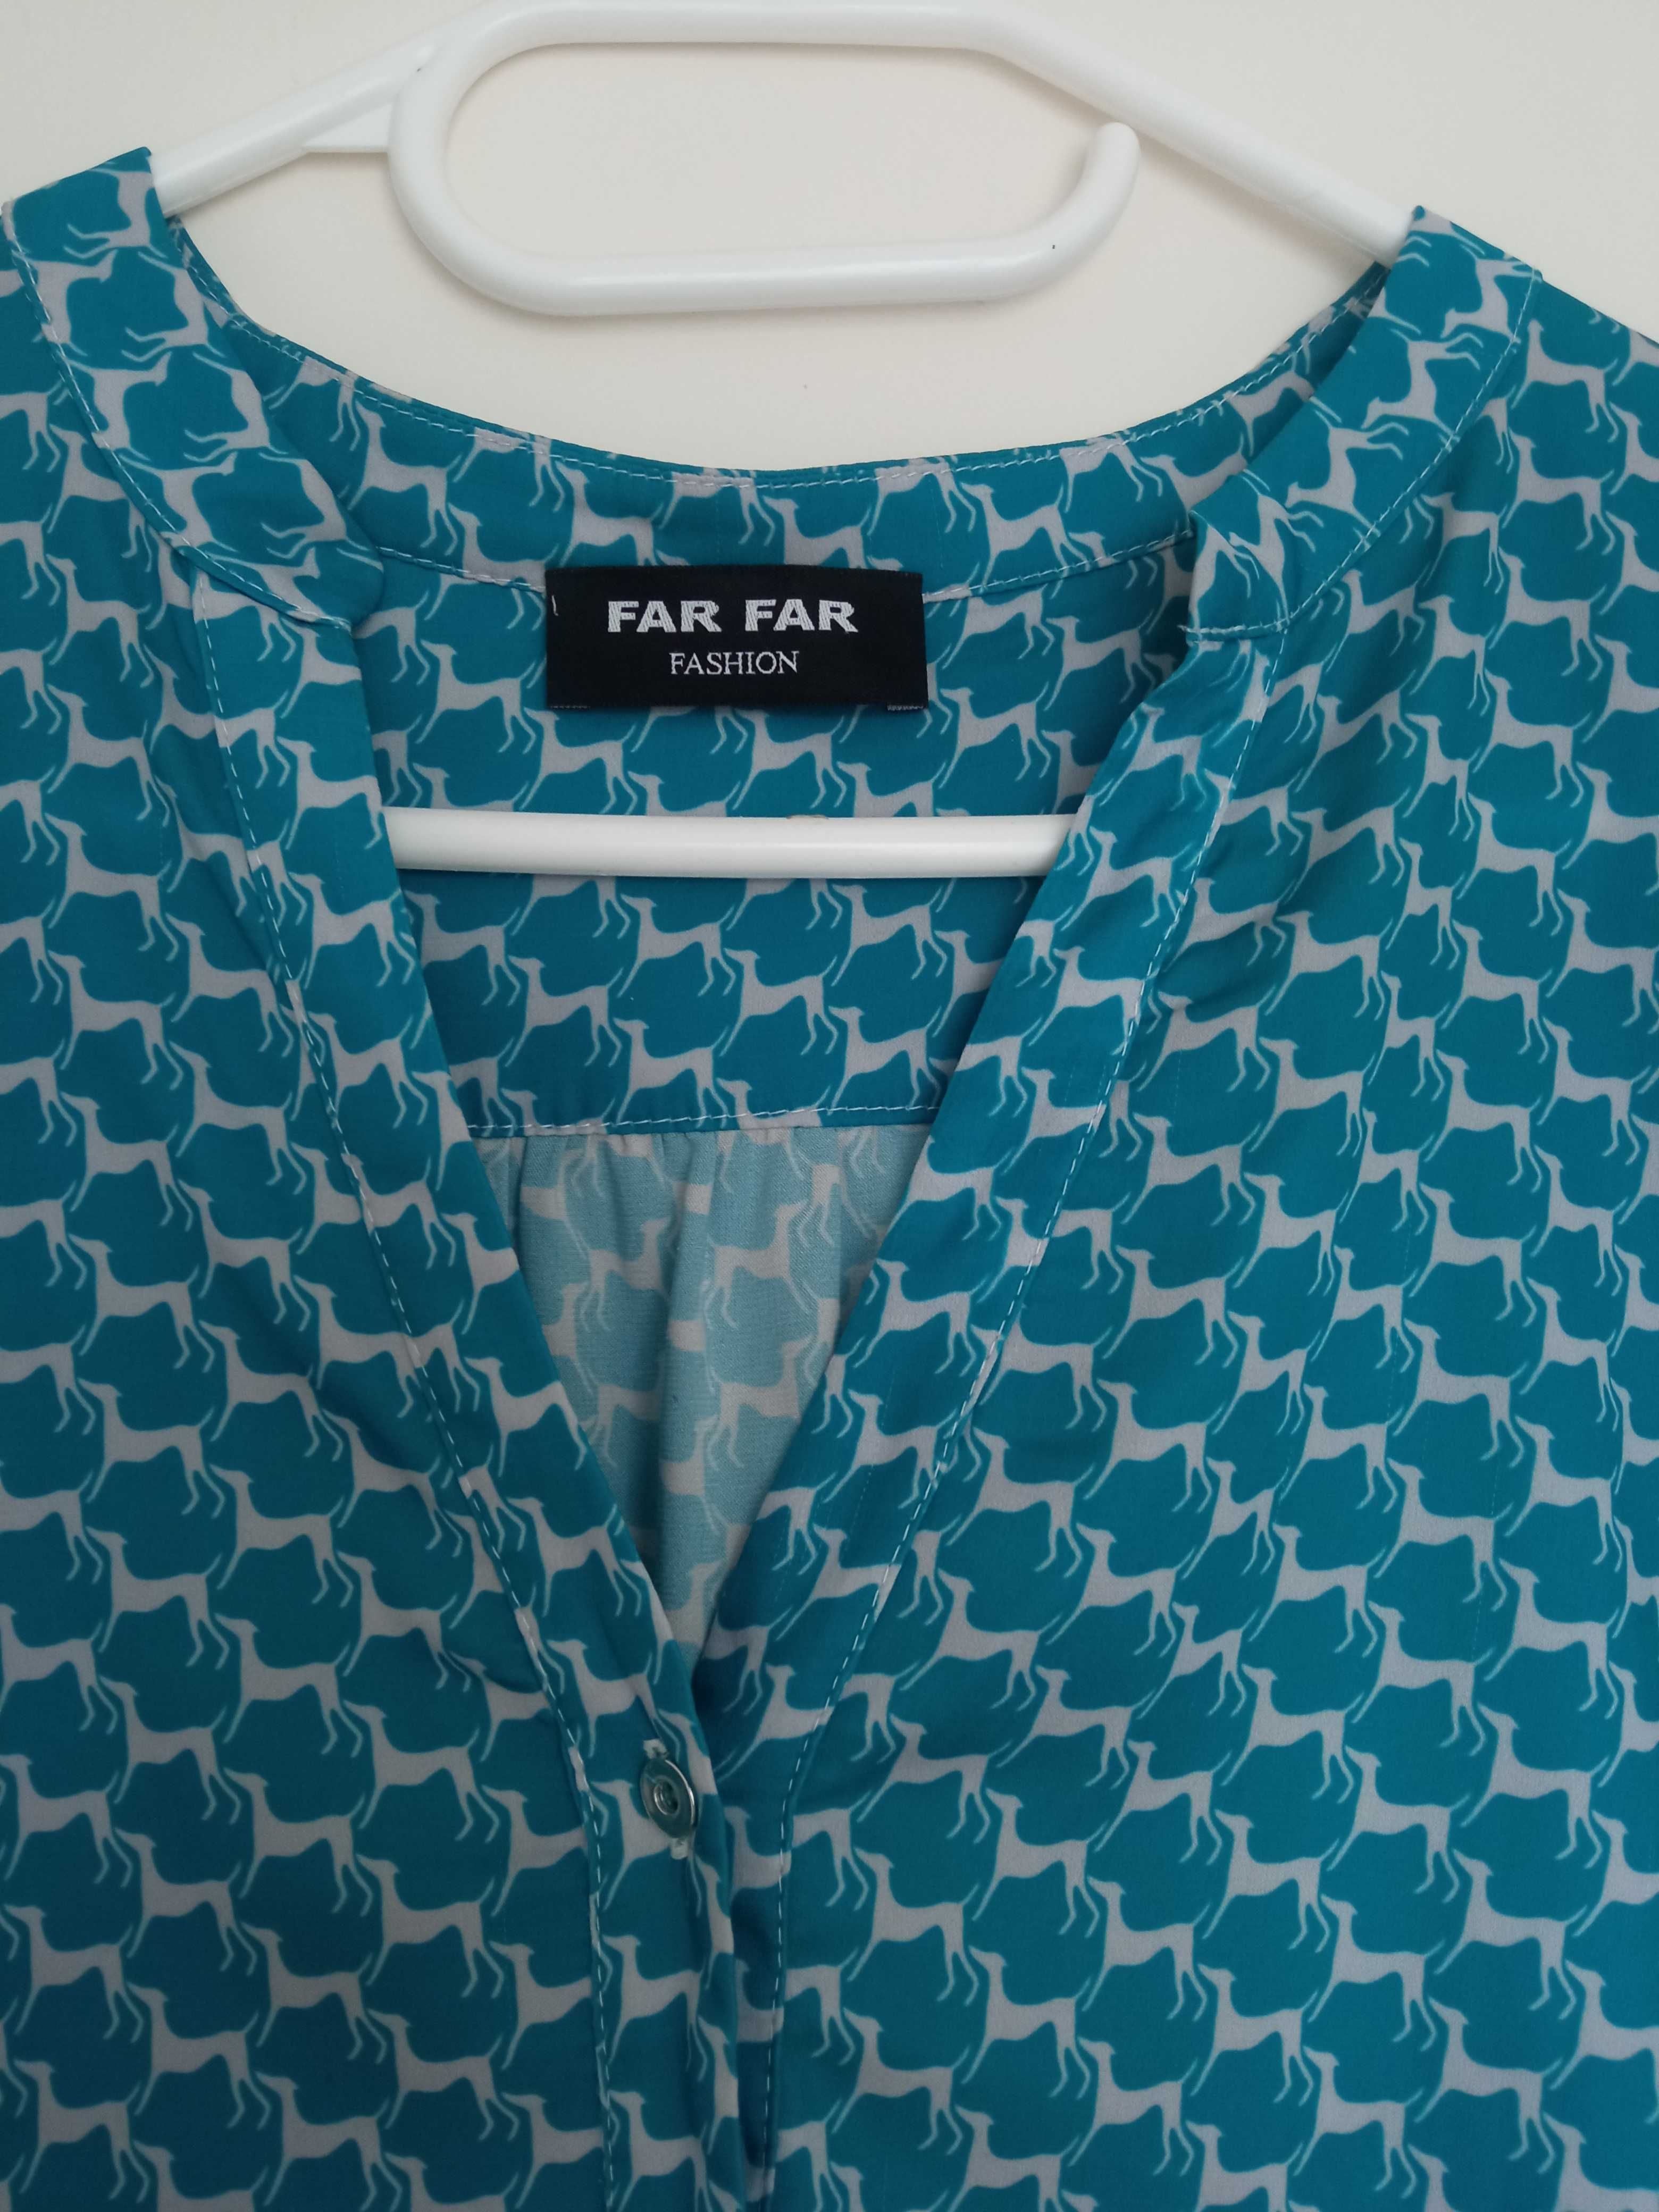 Koszula damska wzorzysta zwiewna mgiełka Turkusowa Far Far 44 XXL